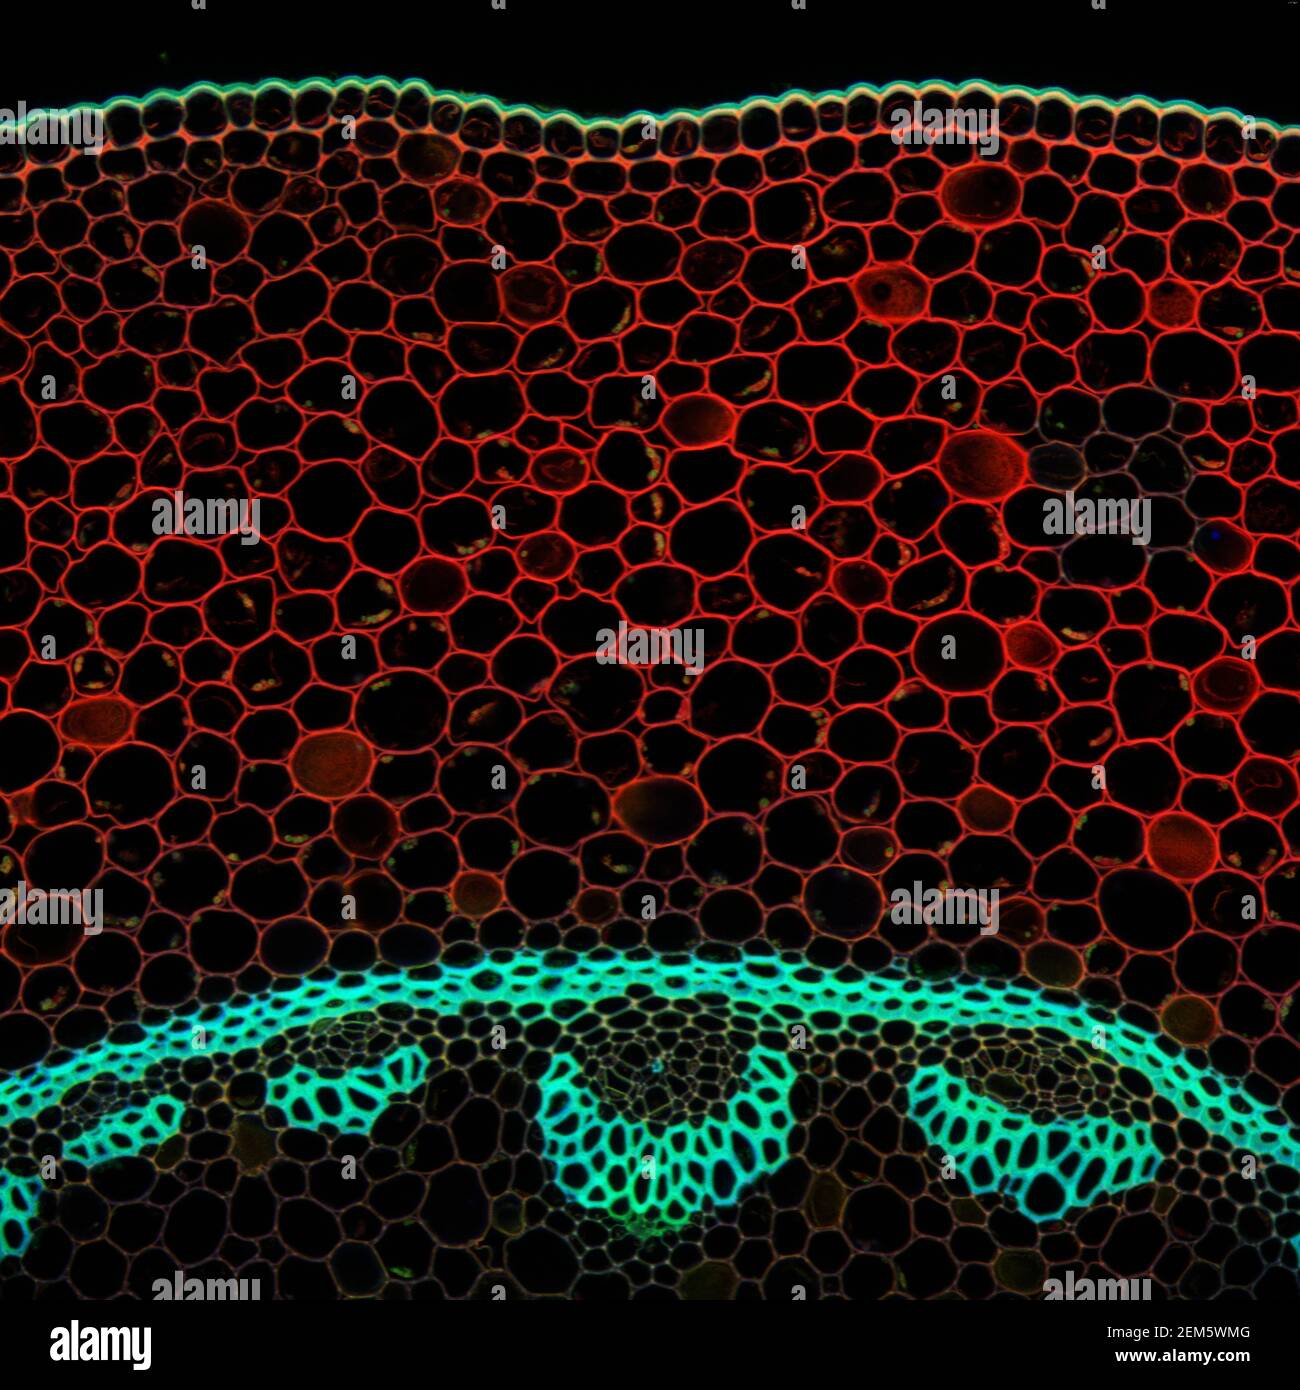 Échantillon microscopique de plantes Convallaria, signal de fluorescence observé par microscopie confocale à balayage laser Banque D'Images